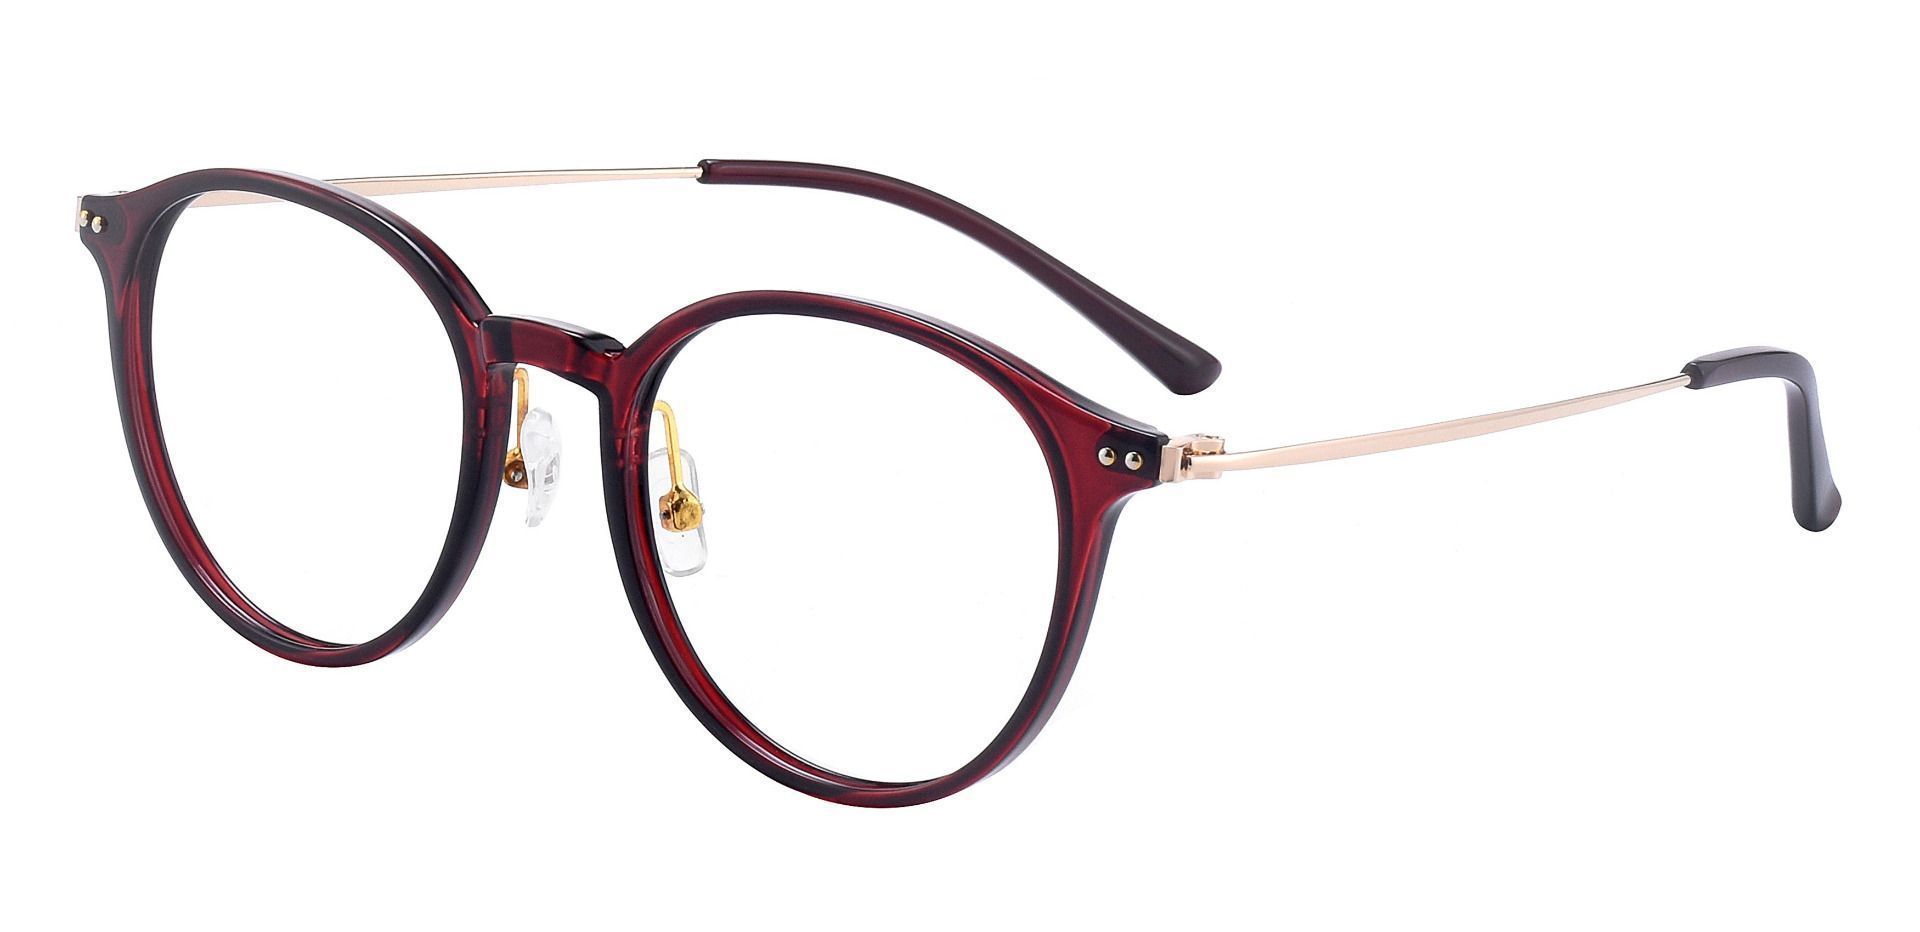 Meyer Round Eyeglasses Frame Red Women S Eyeglasses Payne Glasses